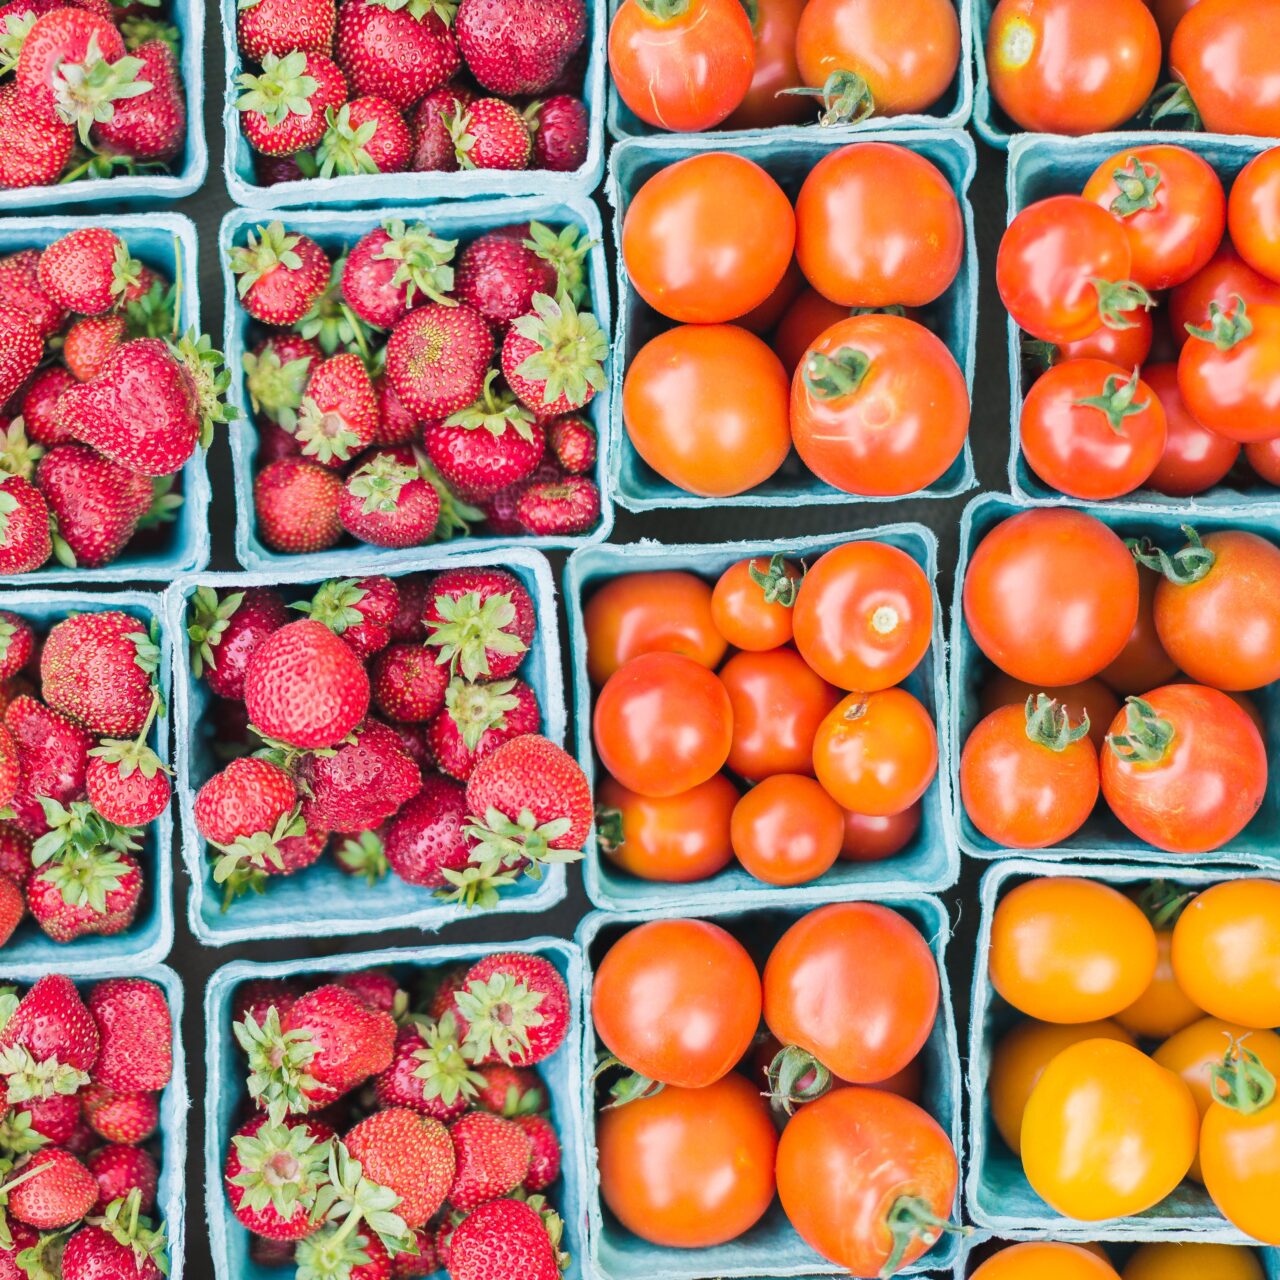 strawberries-tomatoes-the-organic-trust